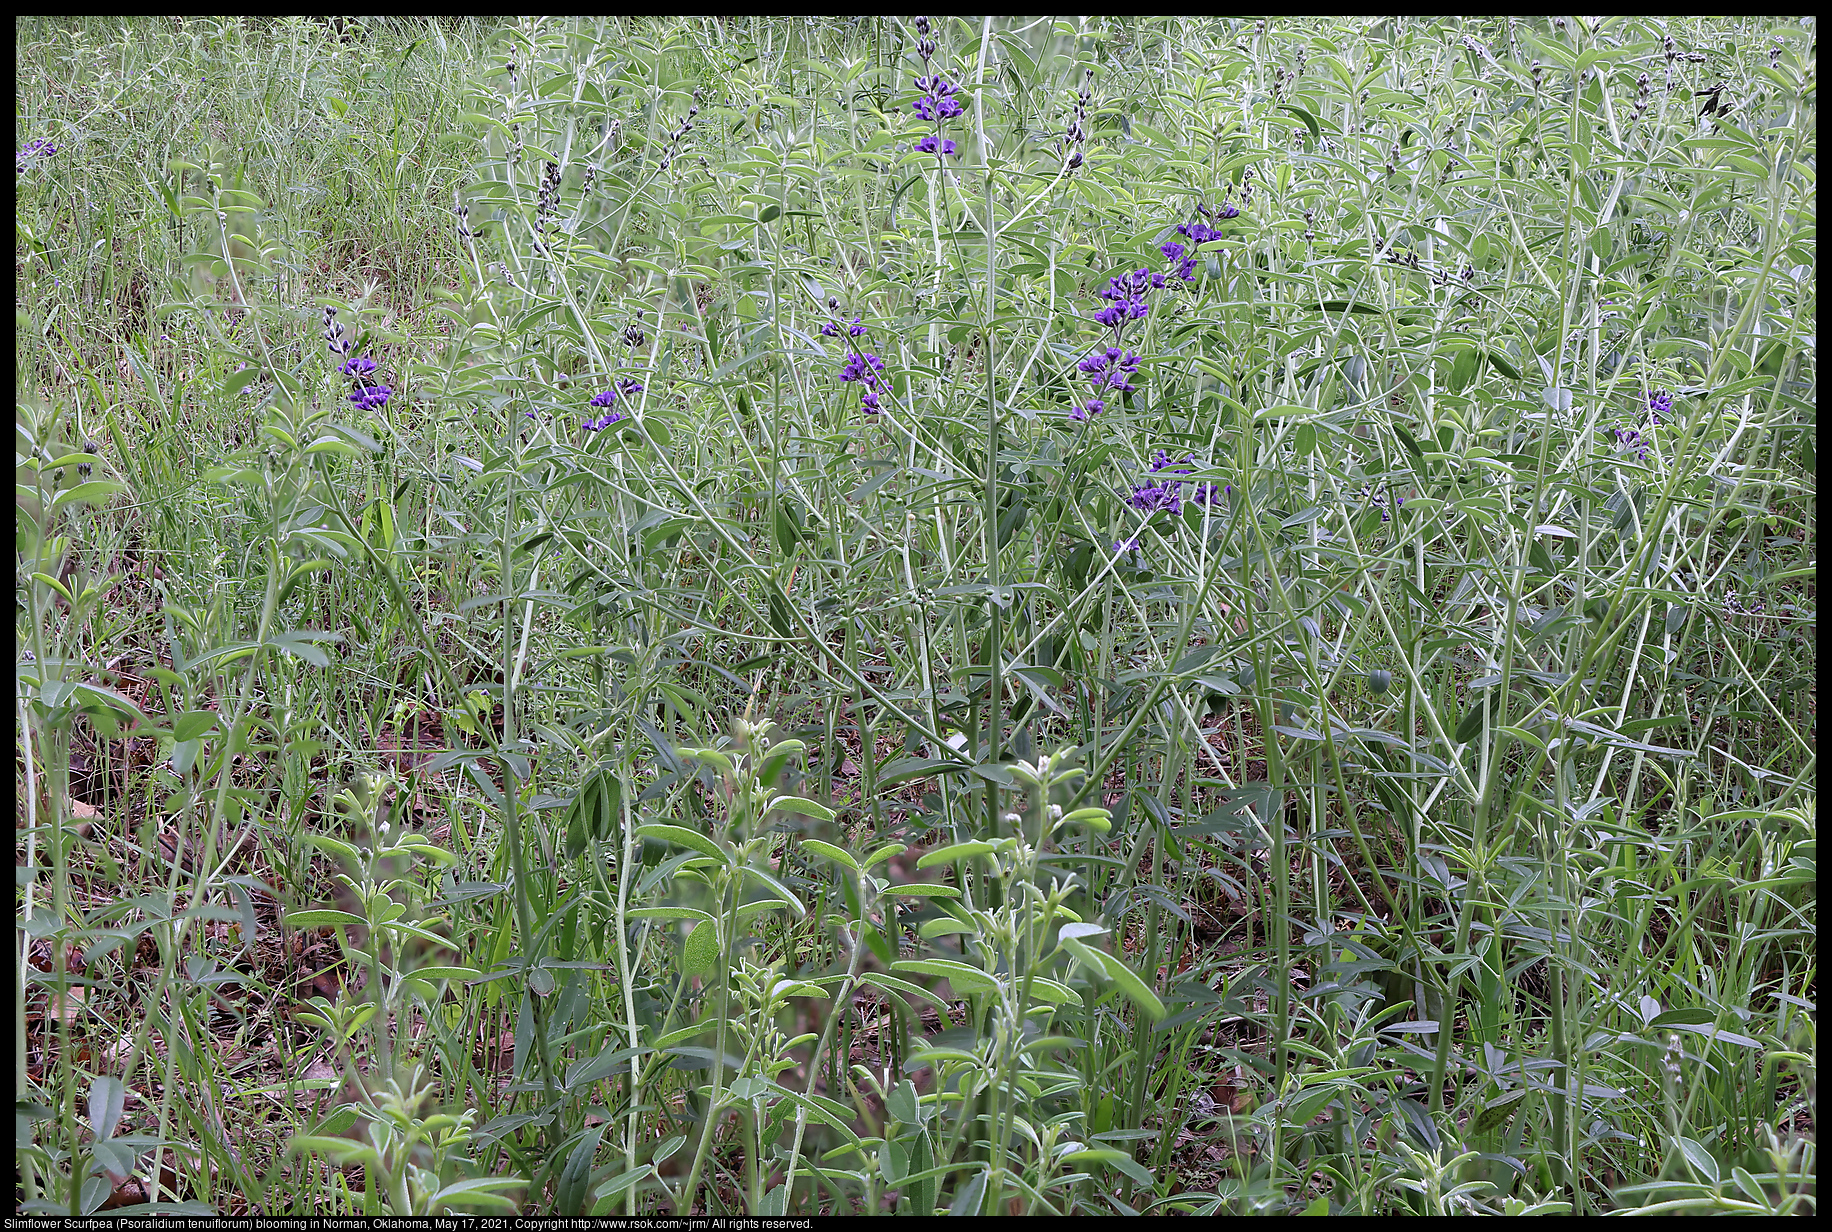 Slimflower Scurfpea (Psoralidium tenuiflorum) blooming in Norman, Oklahoma, May 17, 2021